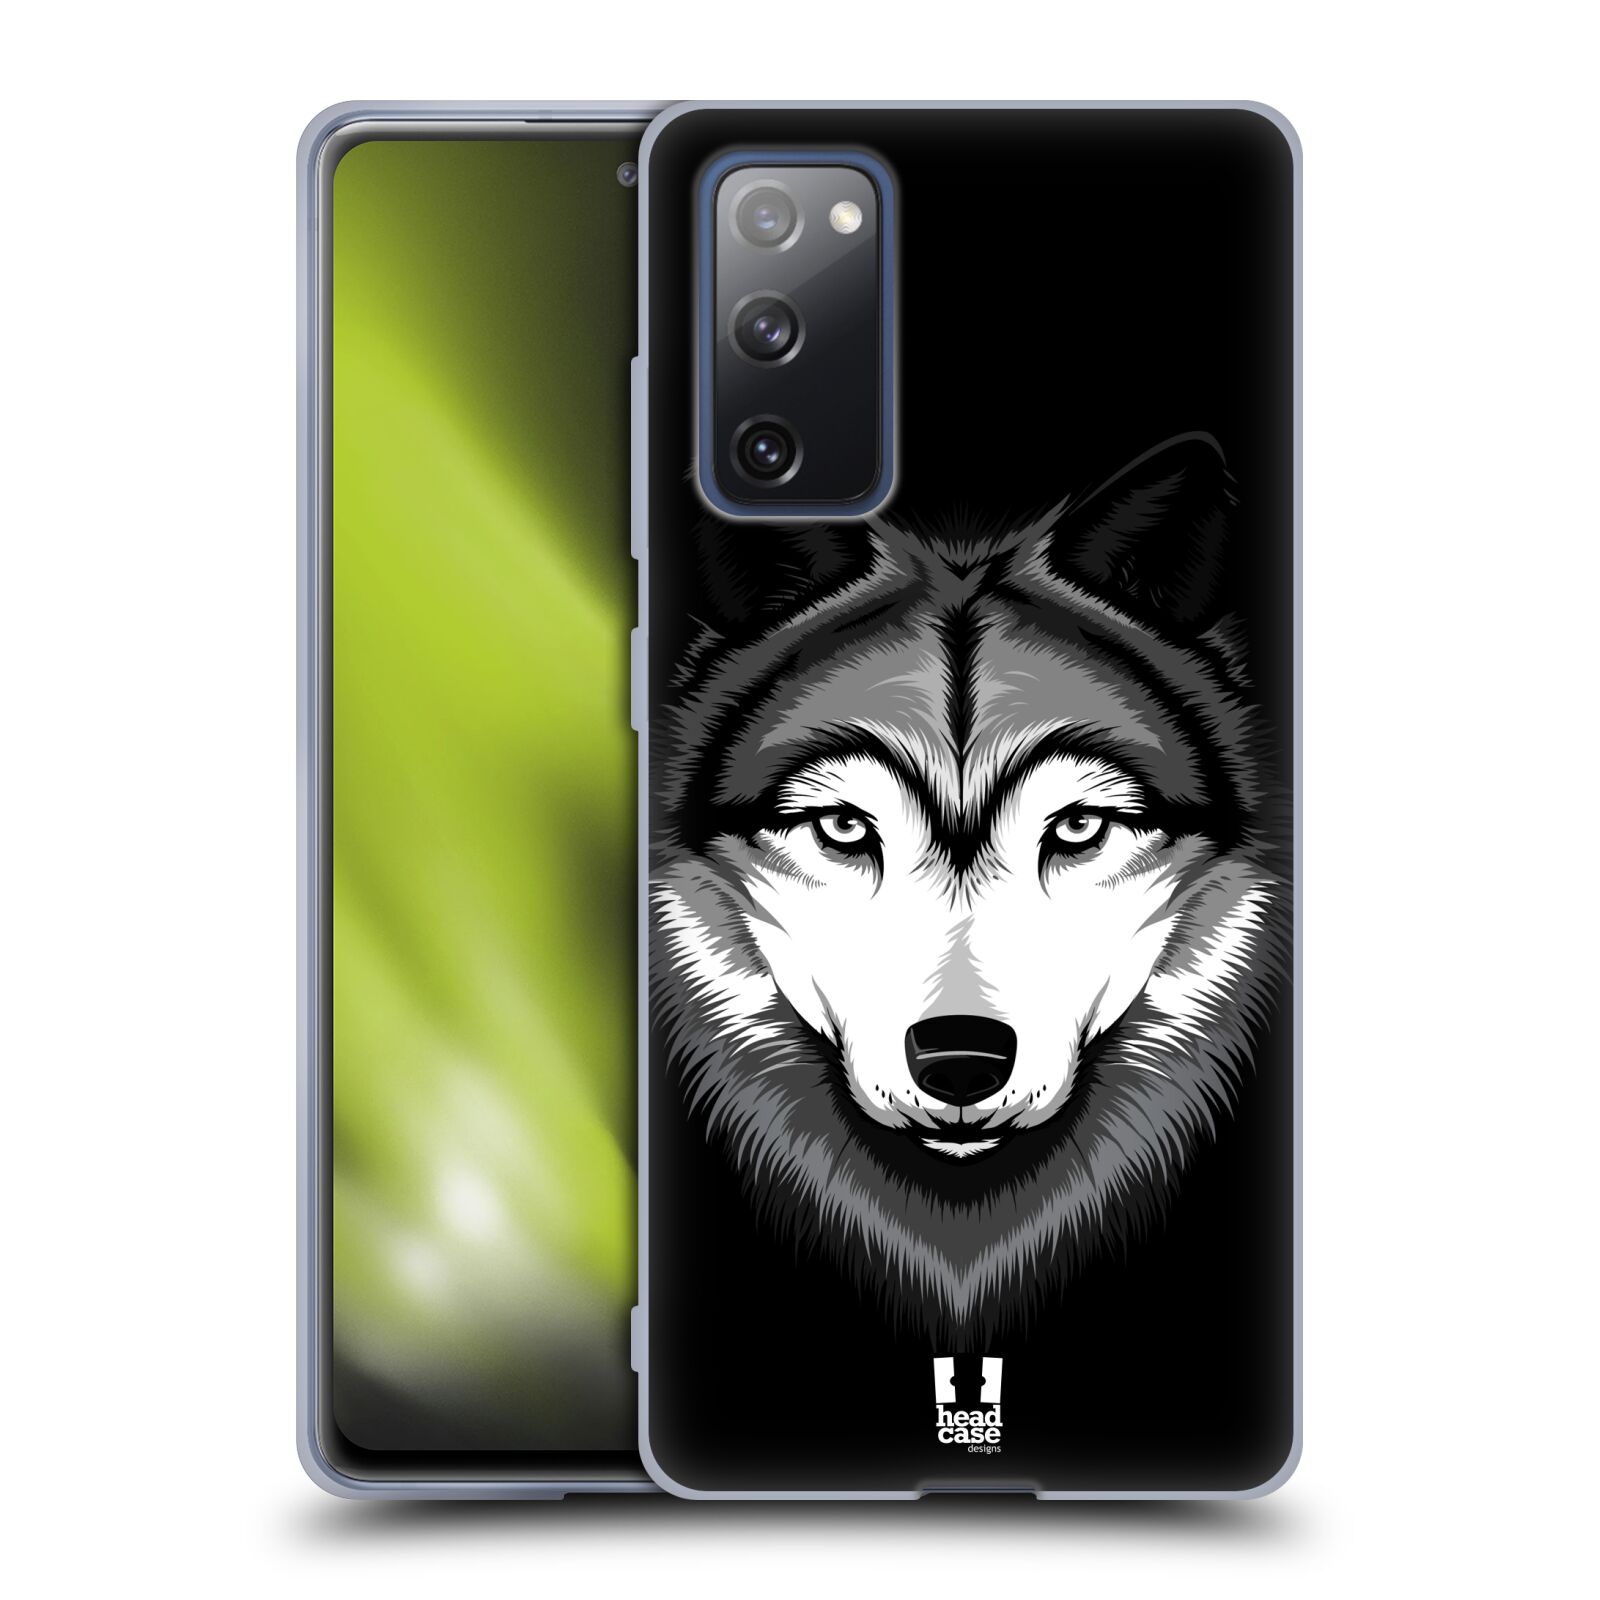 Plastový obal HEAD CASE na mobil Samsung Galaxy S20 FE / S20 FE 5G vzor Zvíře kreslená tvář 2 vlk